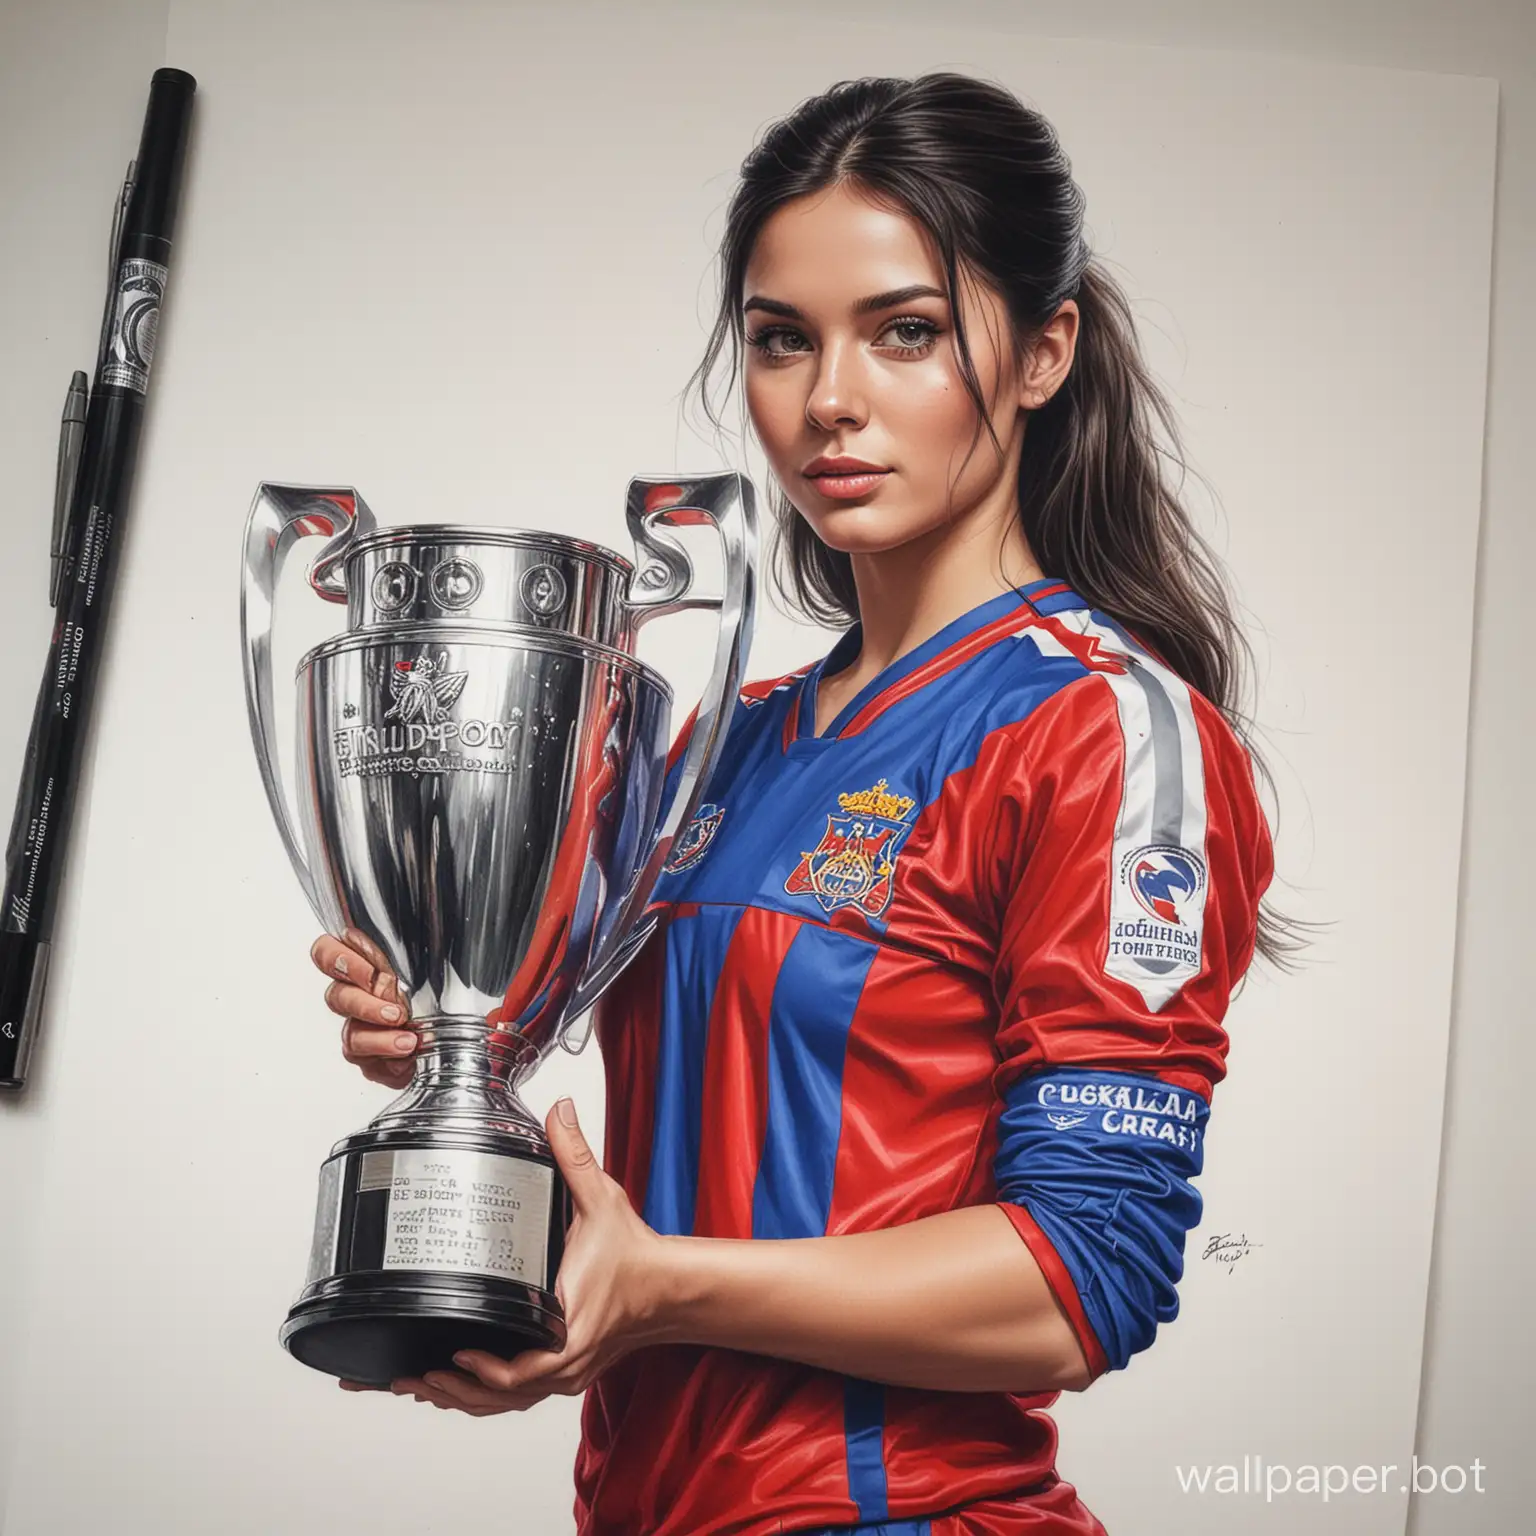 Elena-MacArthur-CSKA-Football-Champion-with-Trophy-in-Hand